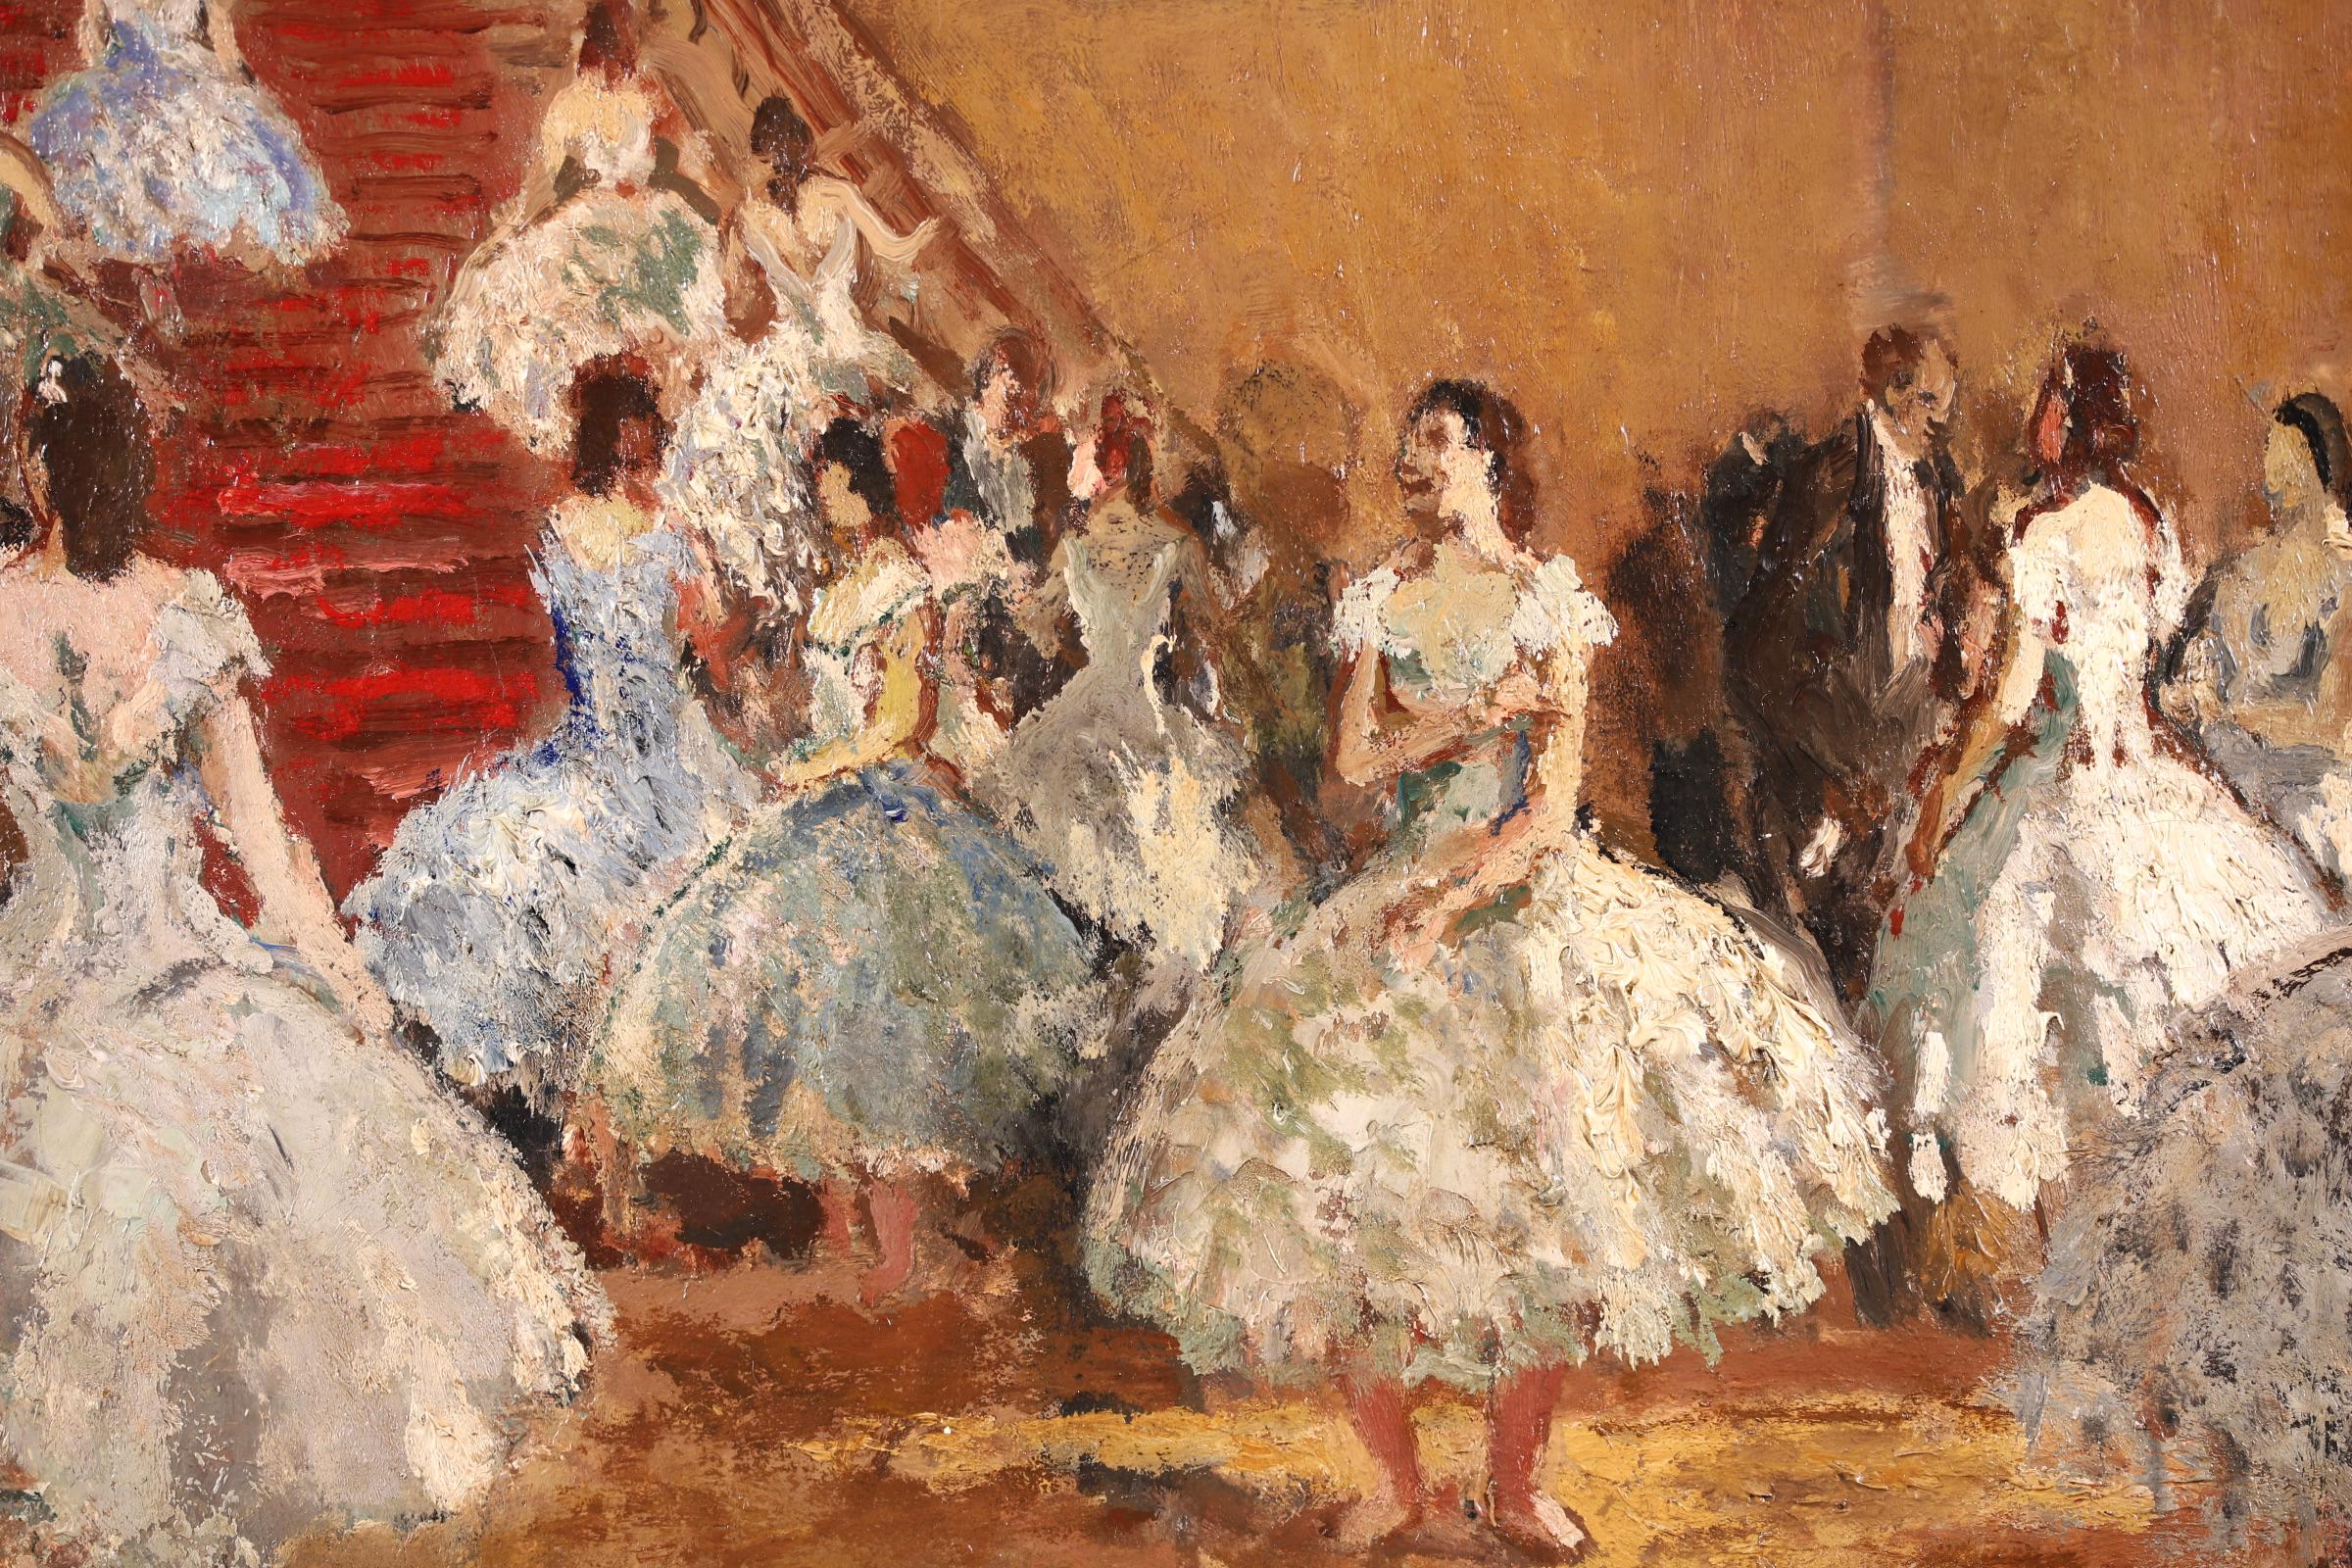 Danseurs dans un foyer - Post Impressionist Figurative Oil by Marcel Cosson - Post-Impressionist Painting by Jean-Louis-Marcel Cosson